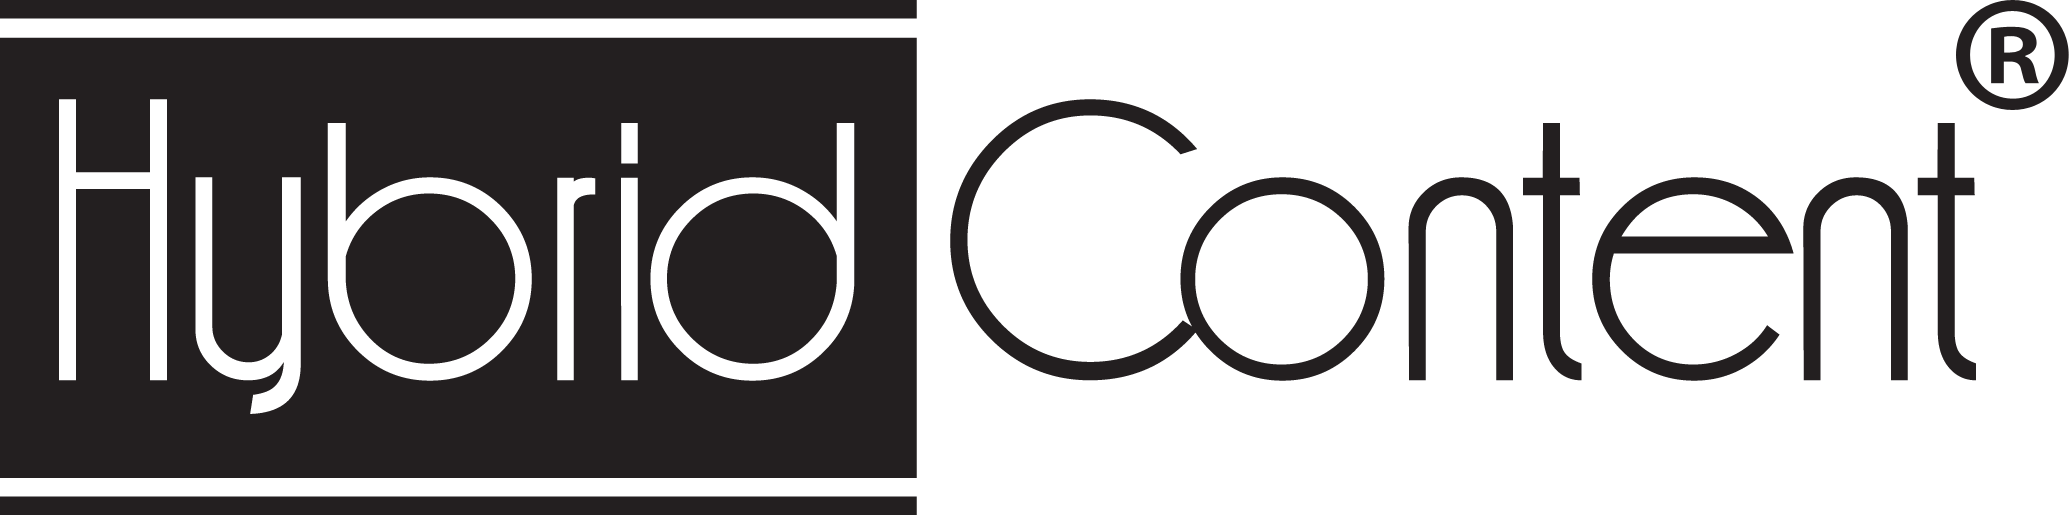 hybrid content logo